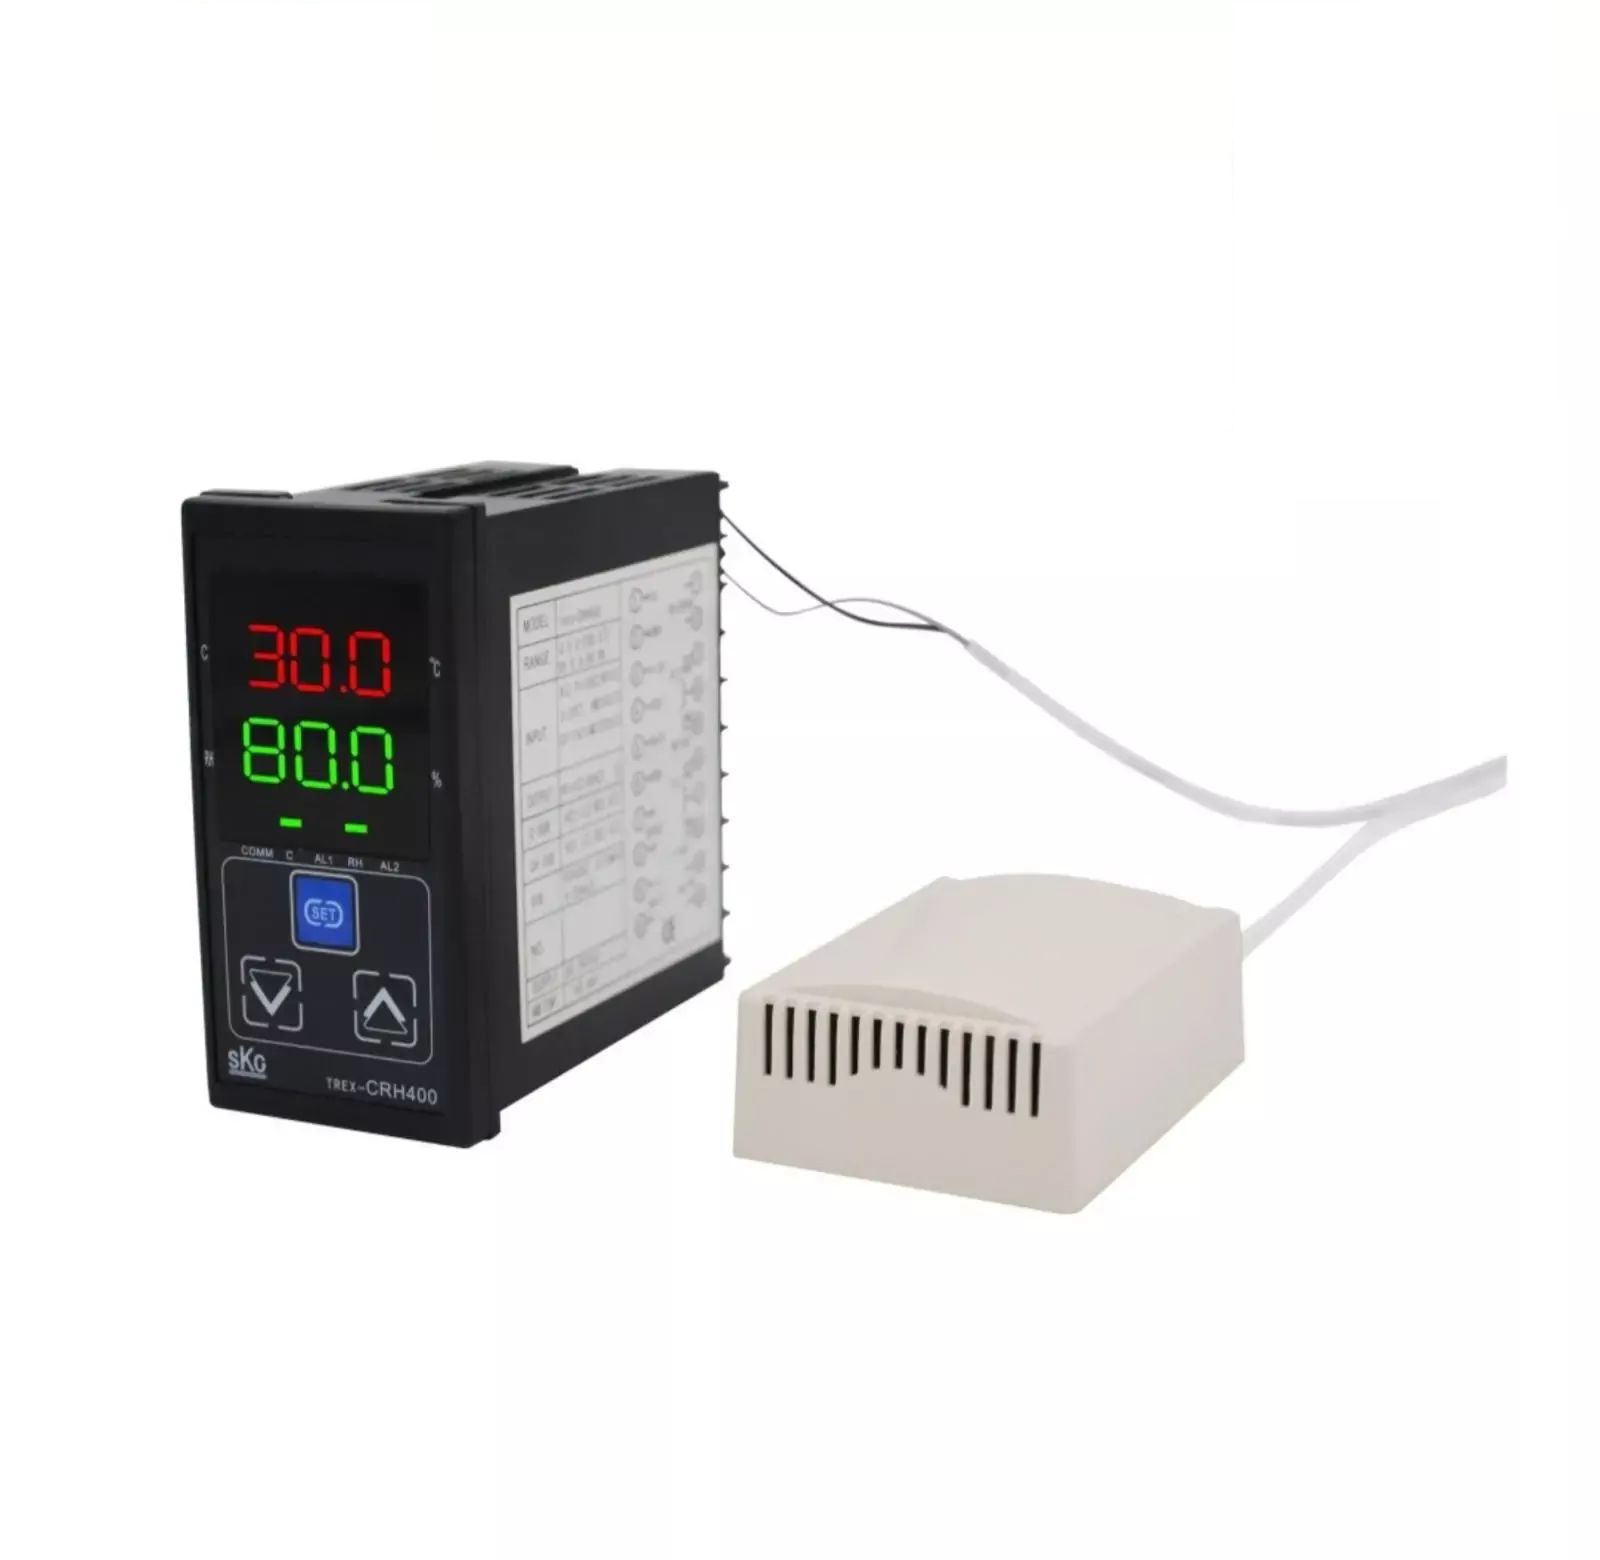 CRH400 digital temperature egg incubator controller